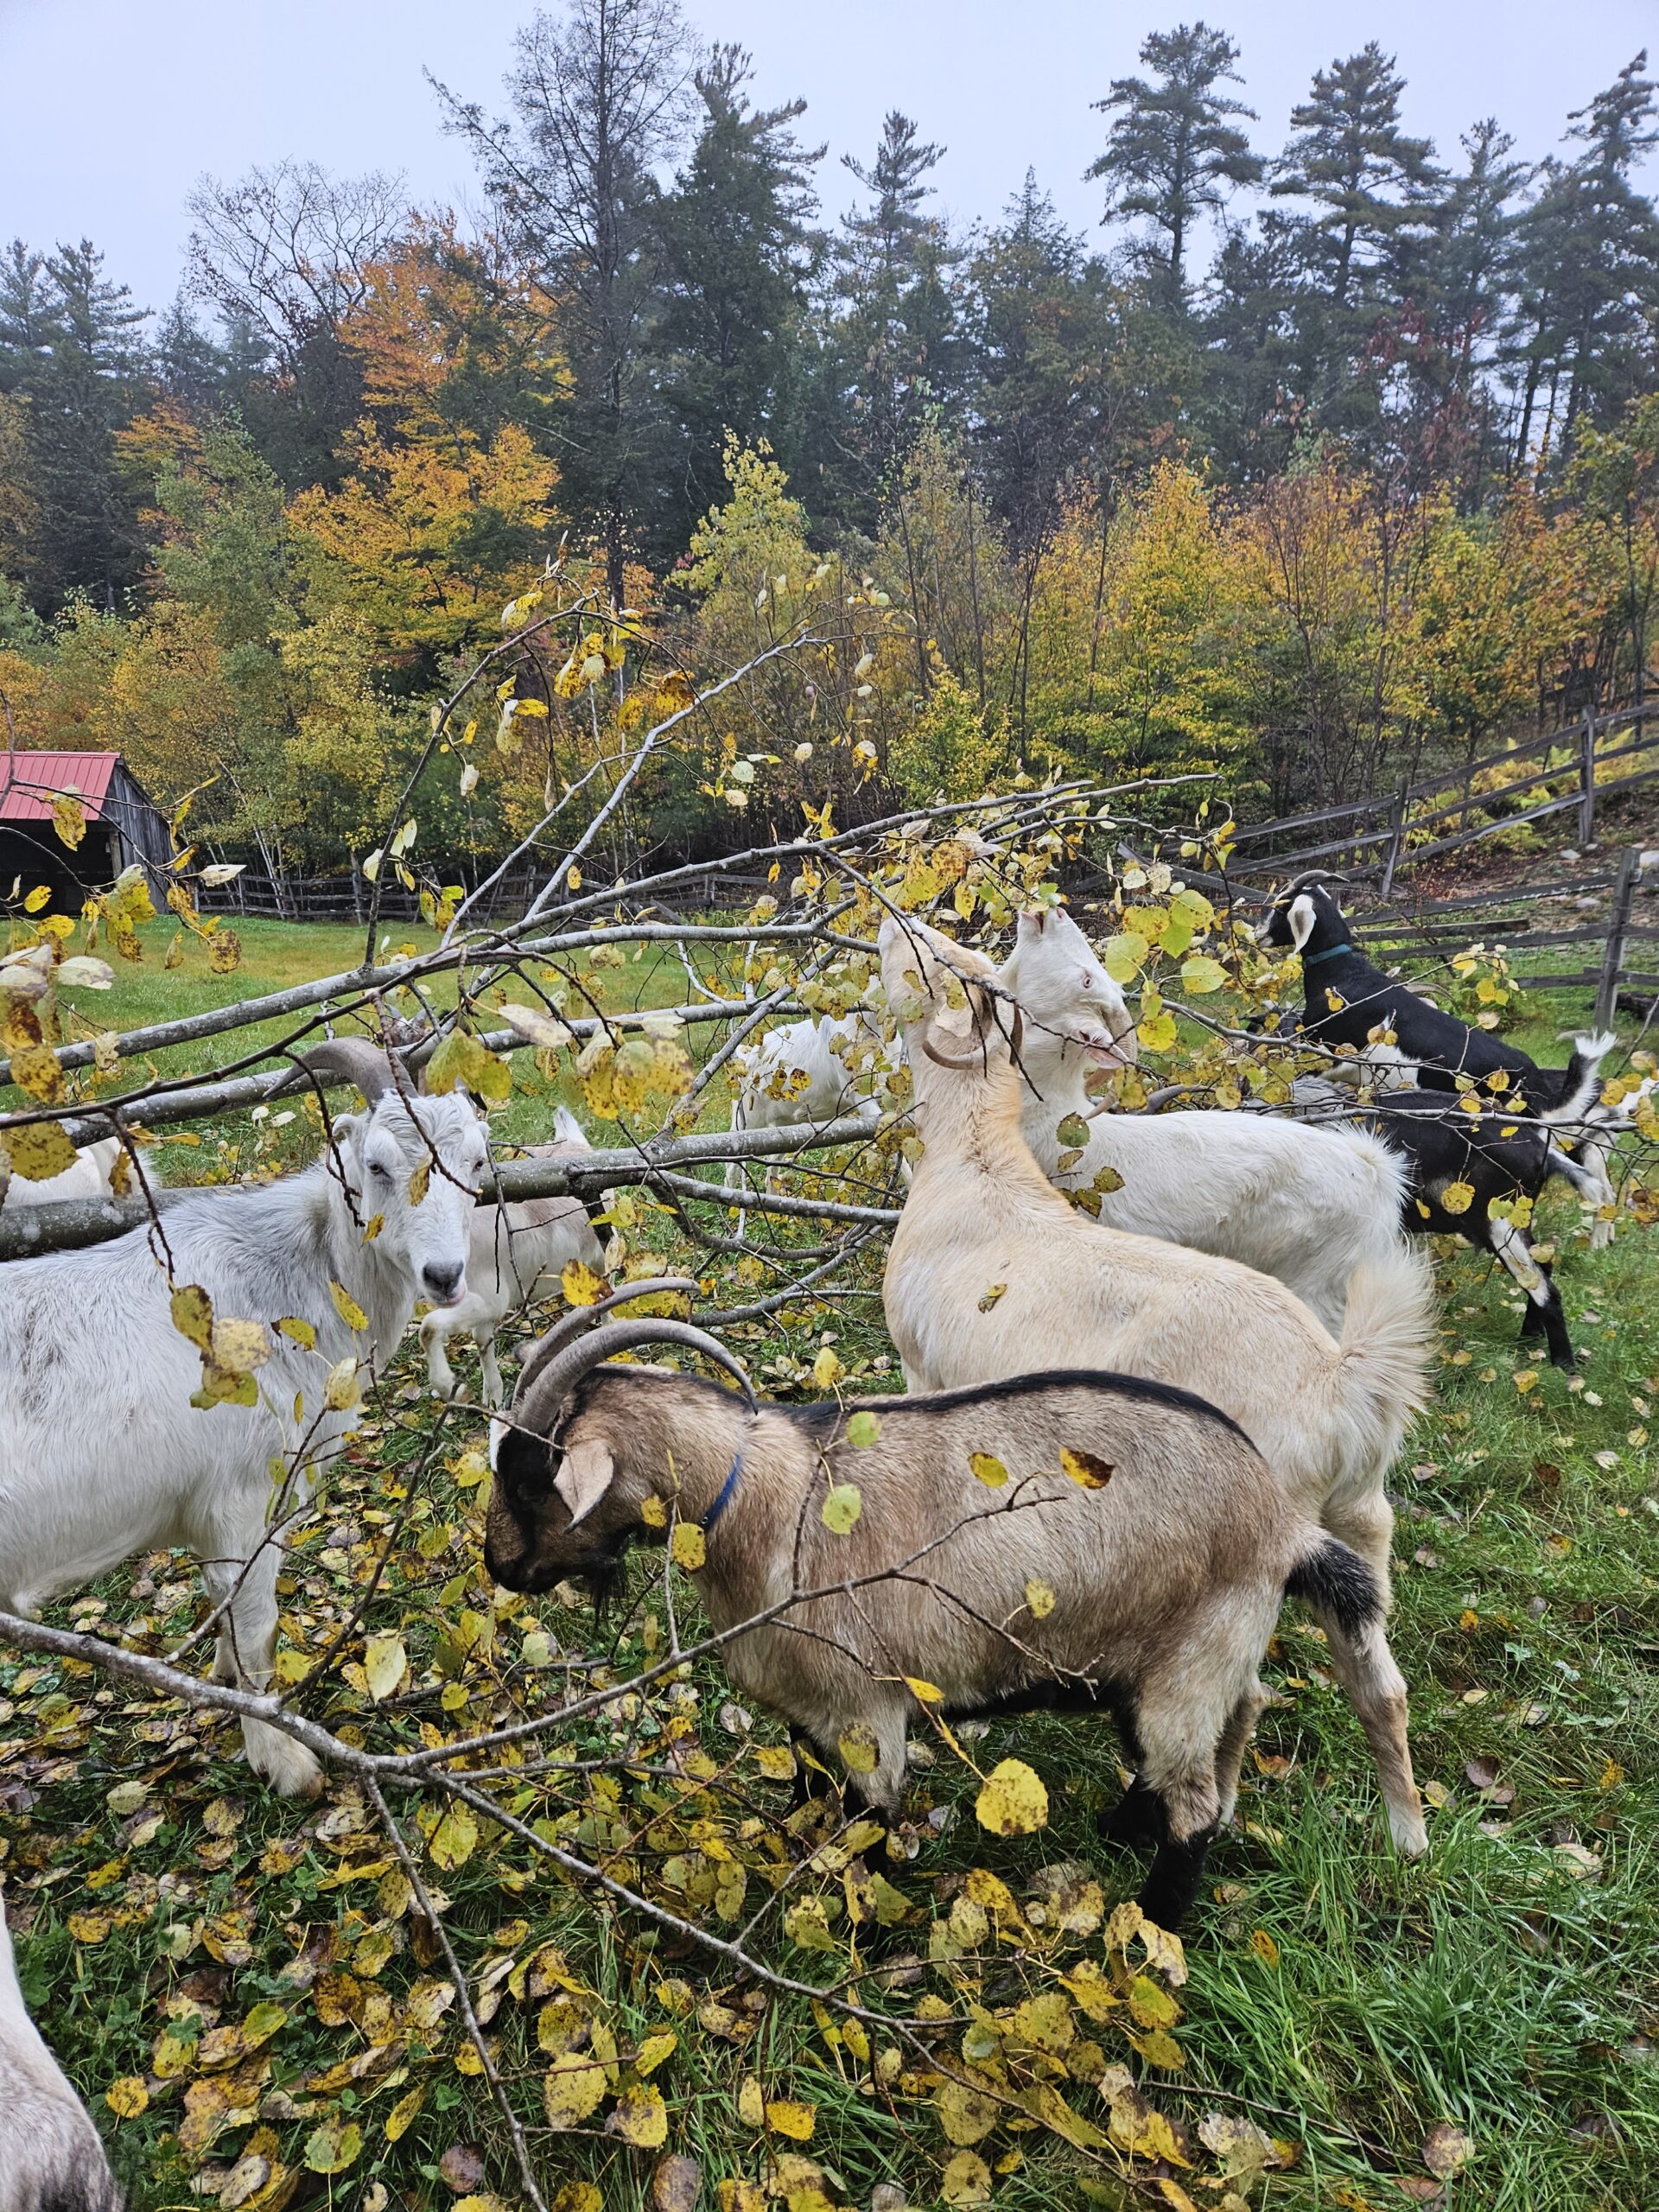 NH goat rentals at Spice of Life Farm